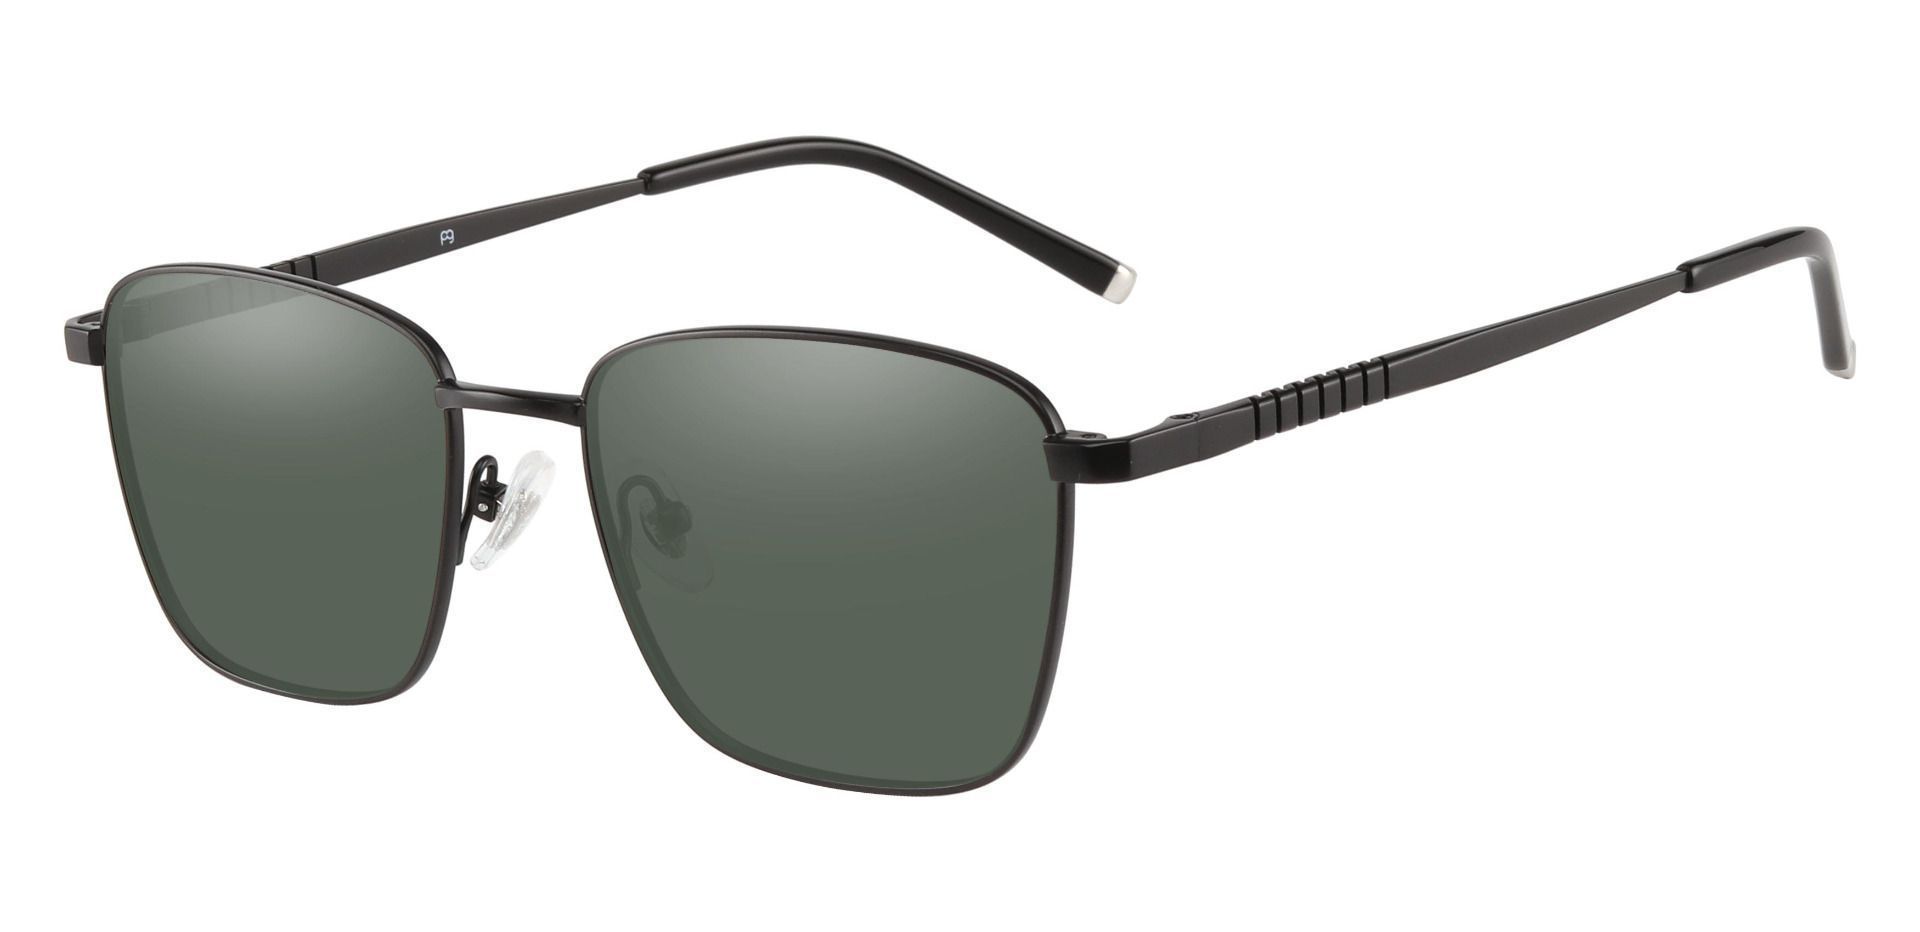 May Square Progressive Sunglasses - Black Frame With Green Lenses